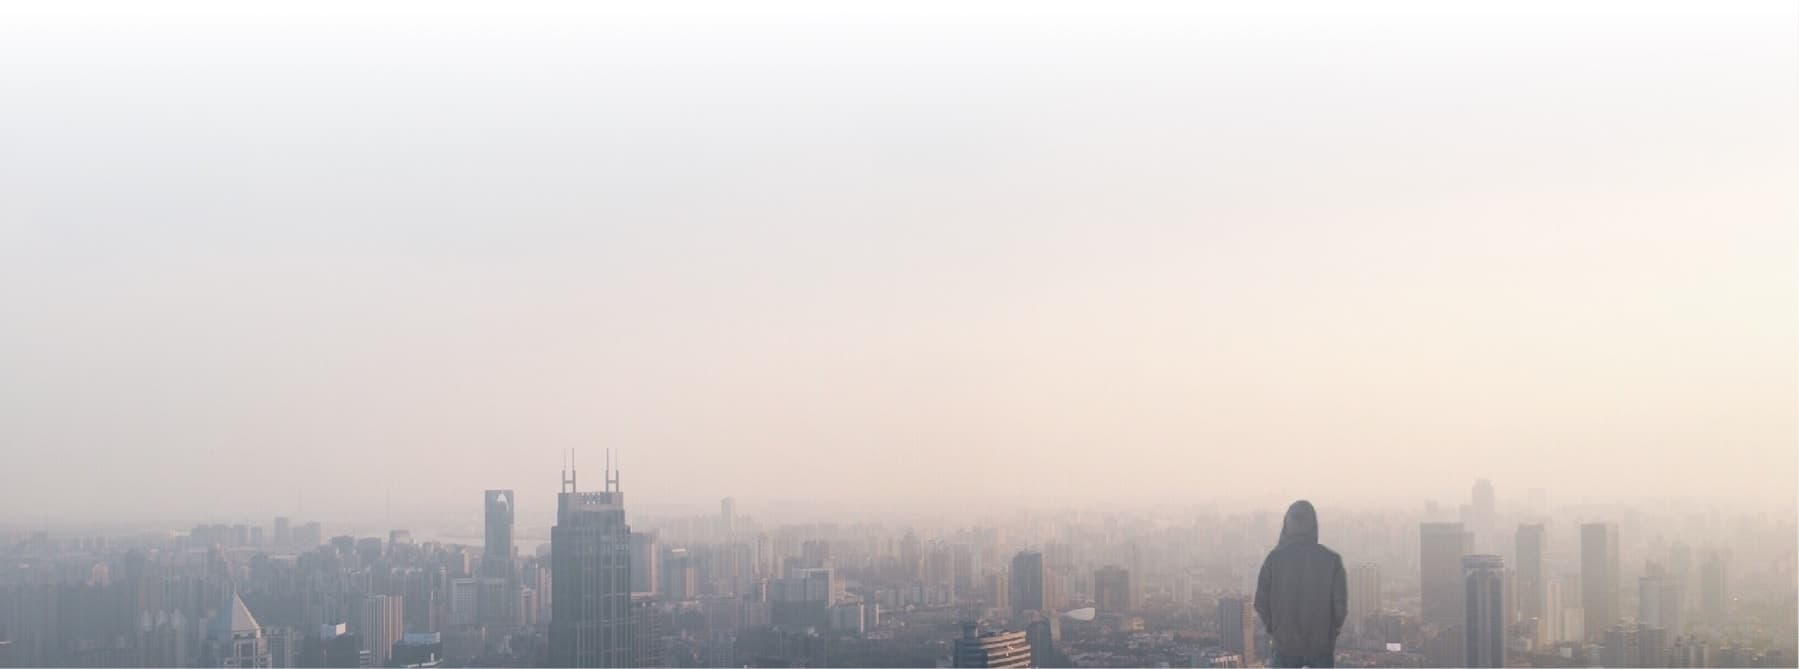 Man in hooded sweatshirt overlooking smoggy cityscape